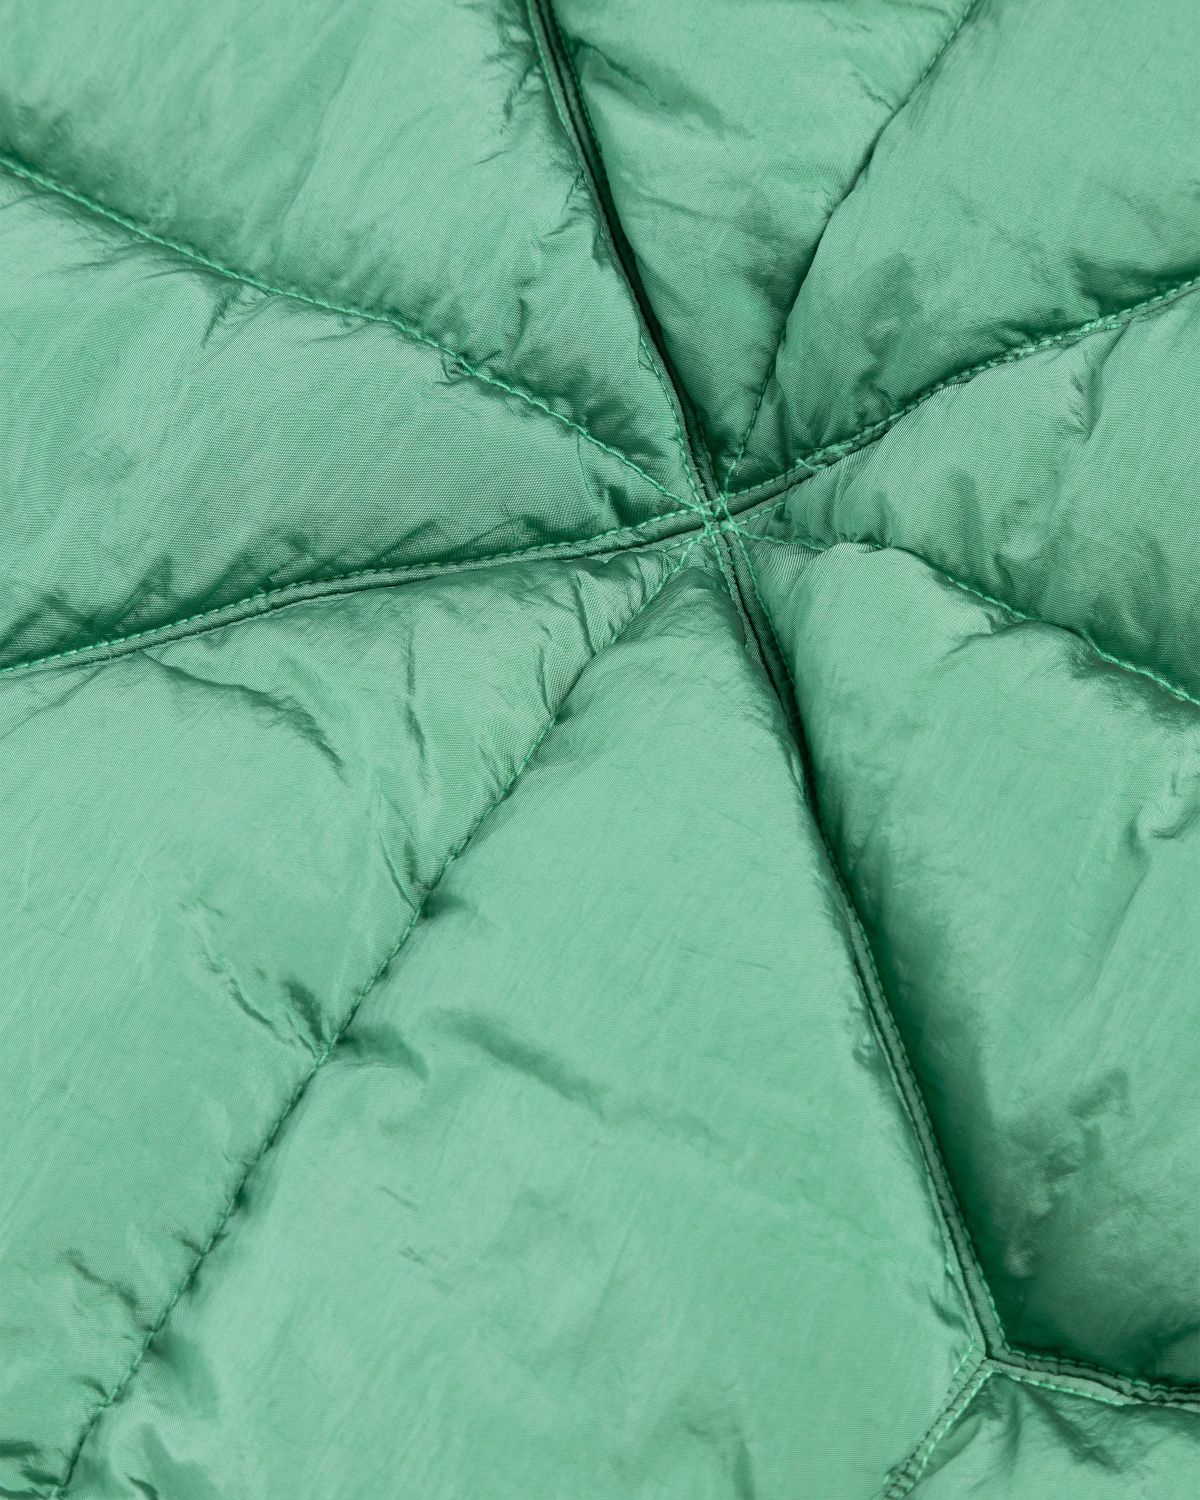 Stone Island – Nylon Metal Down Vest Light Green - Outerwear - Green - Image 6